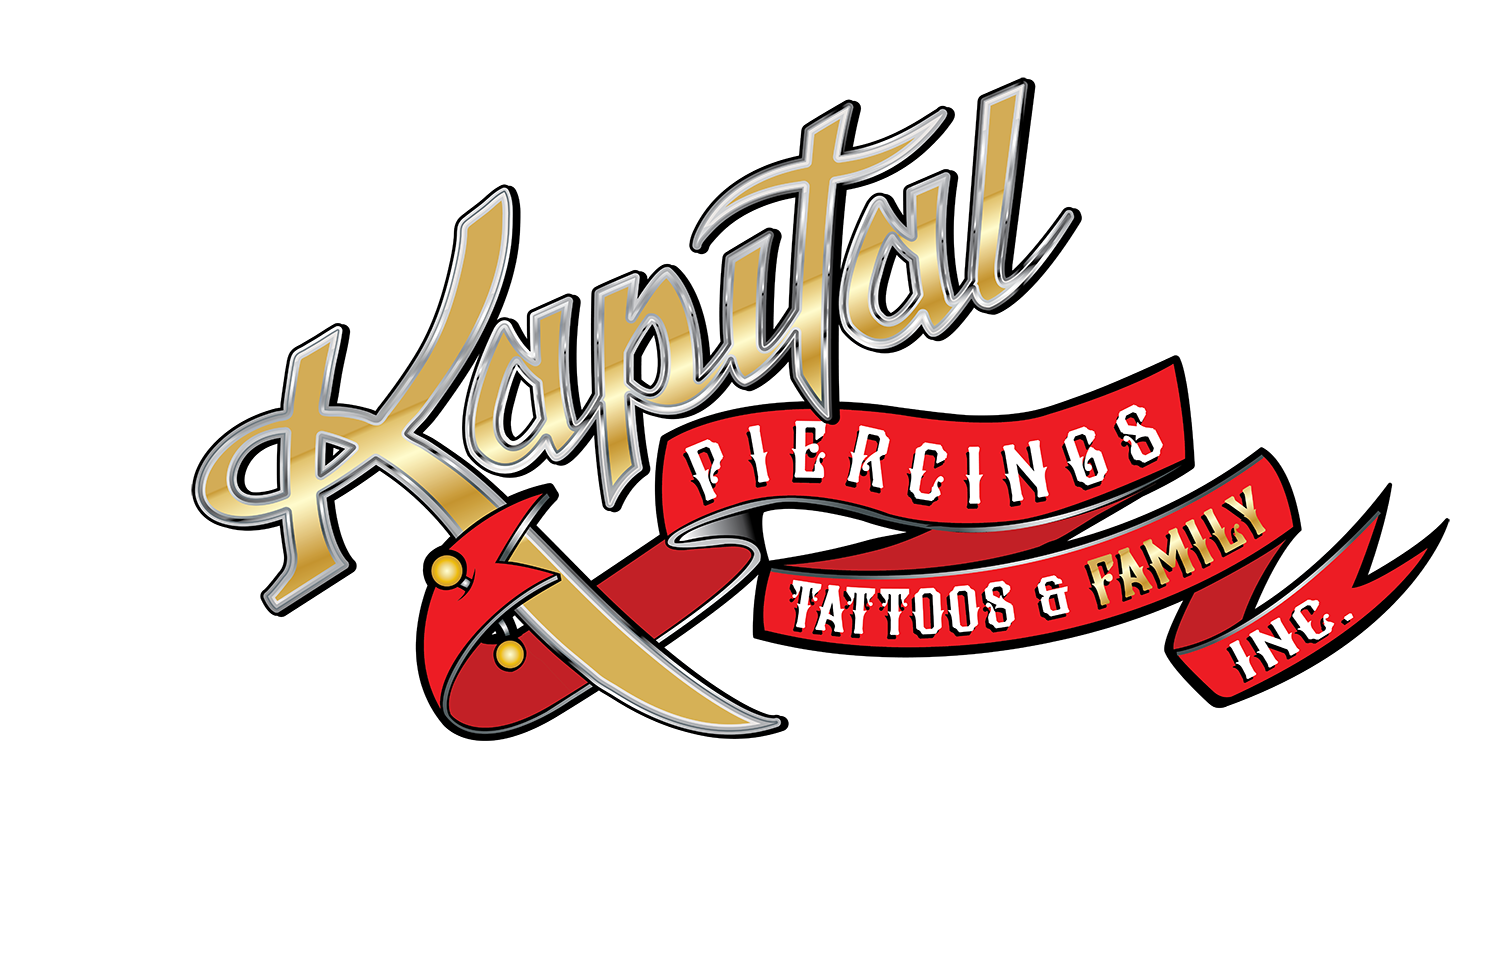 Kapital Piercings Tattoos & Family Inc.